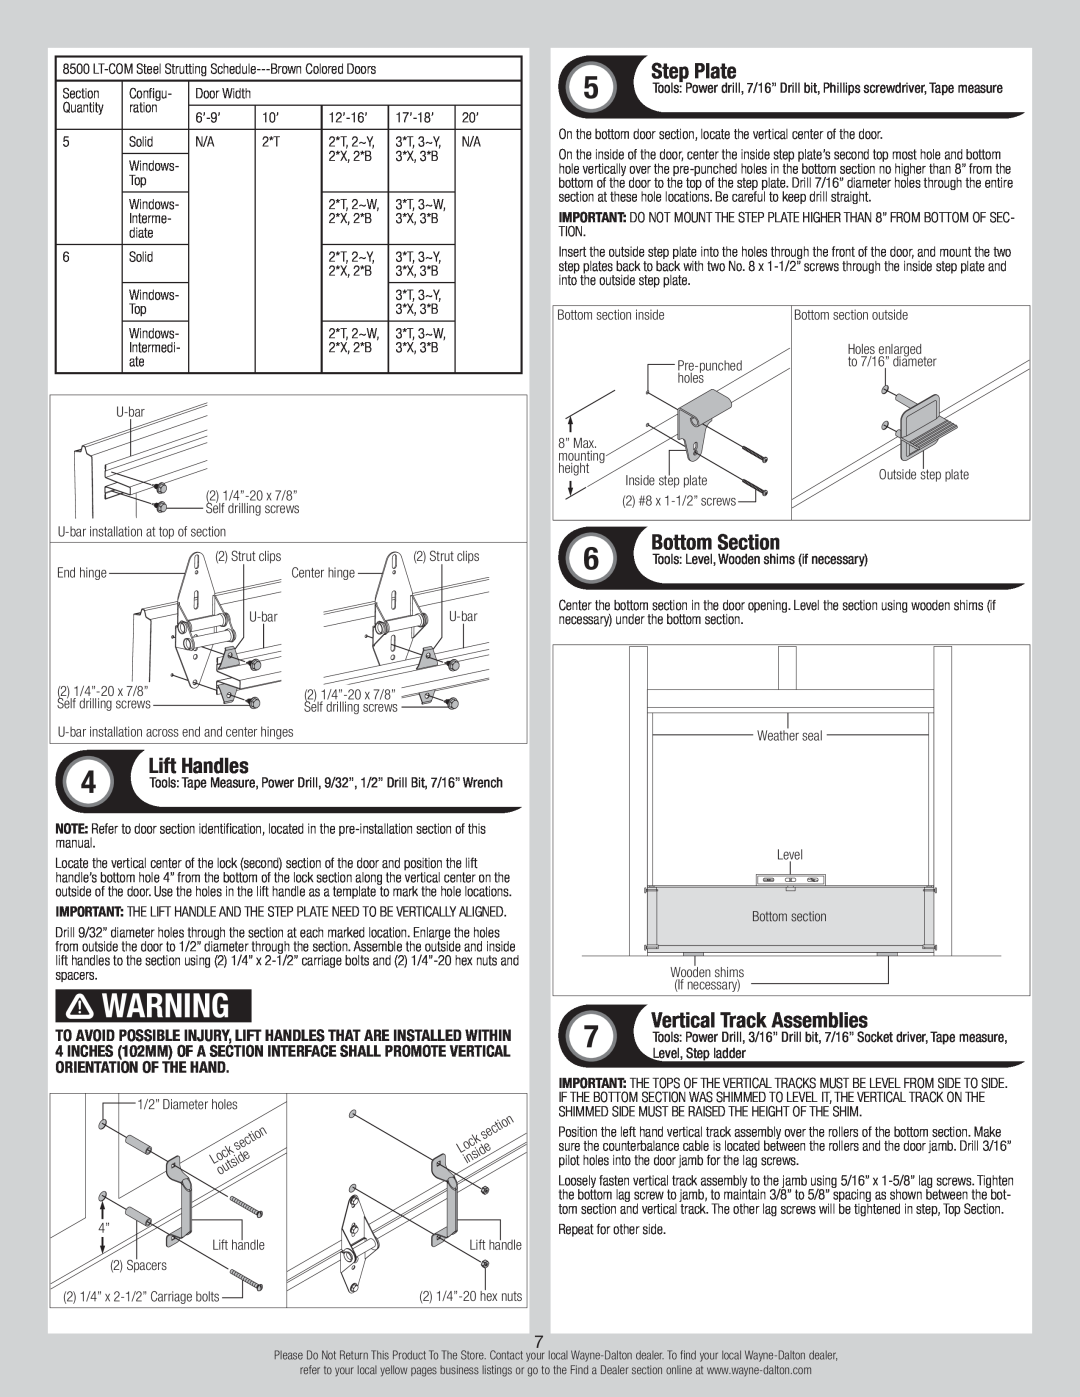 Wayne-Dalton 8500, 8300 installation instructions Lift Handles, Step Plate, Bottom Section, Vertical Track Assemblies 